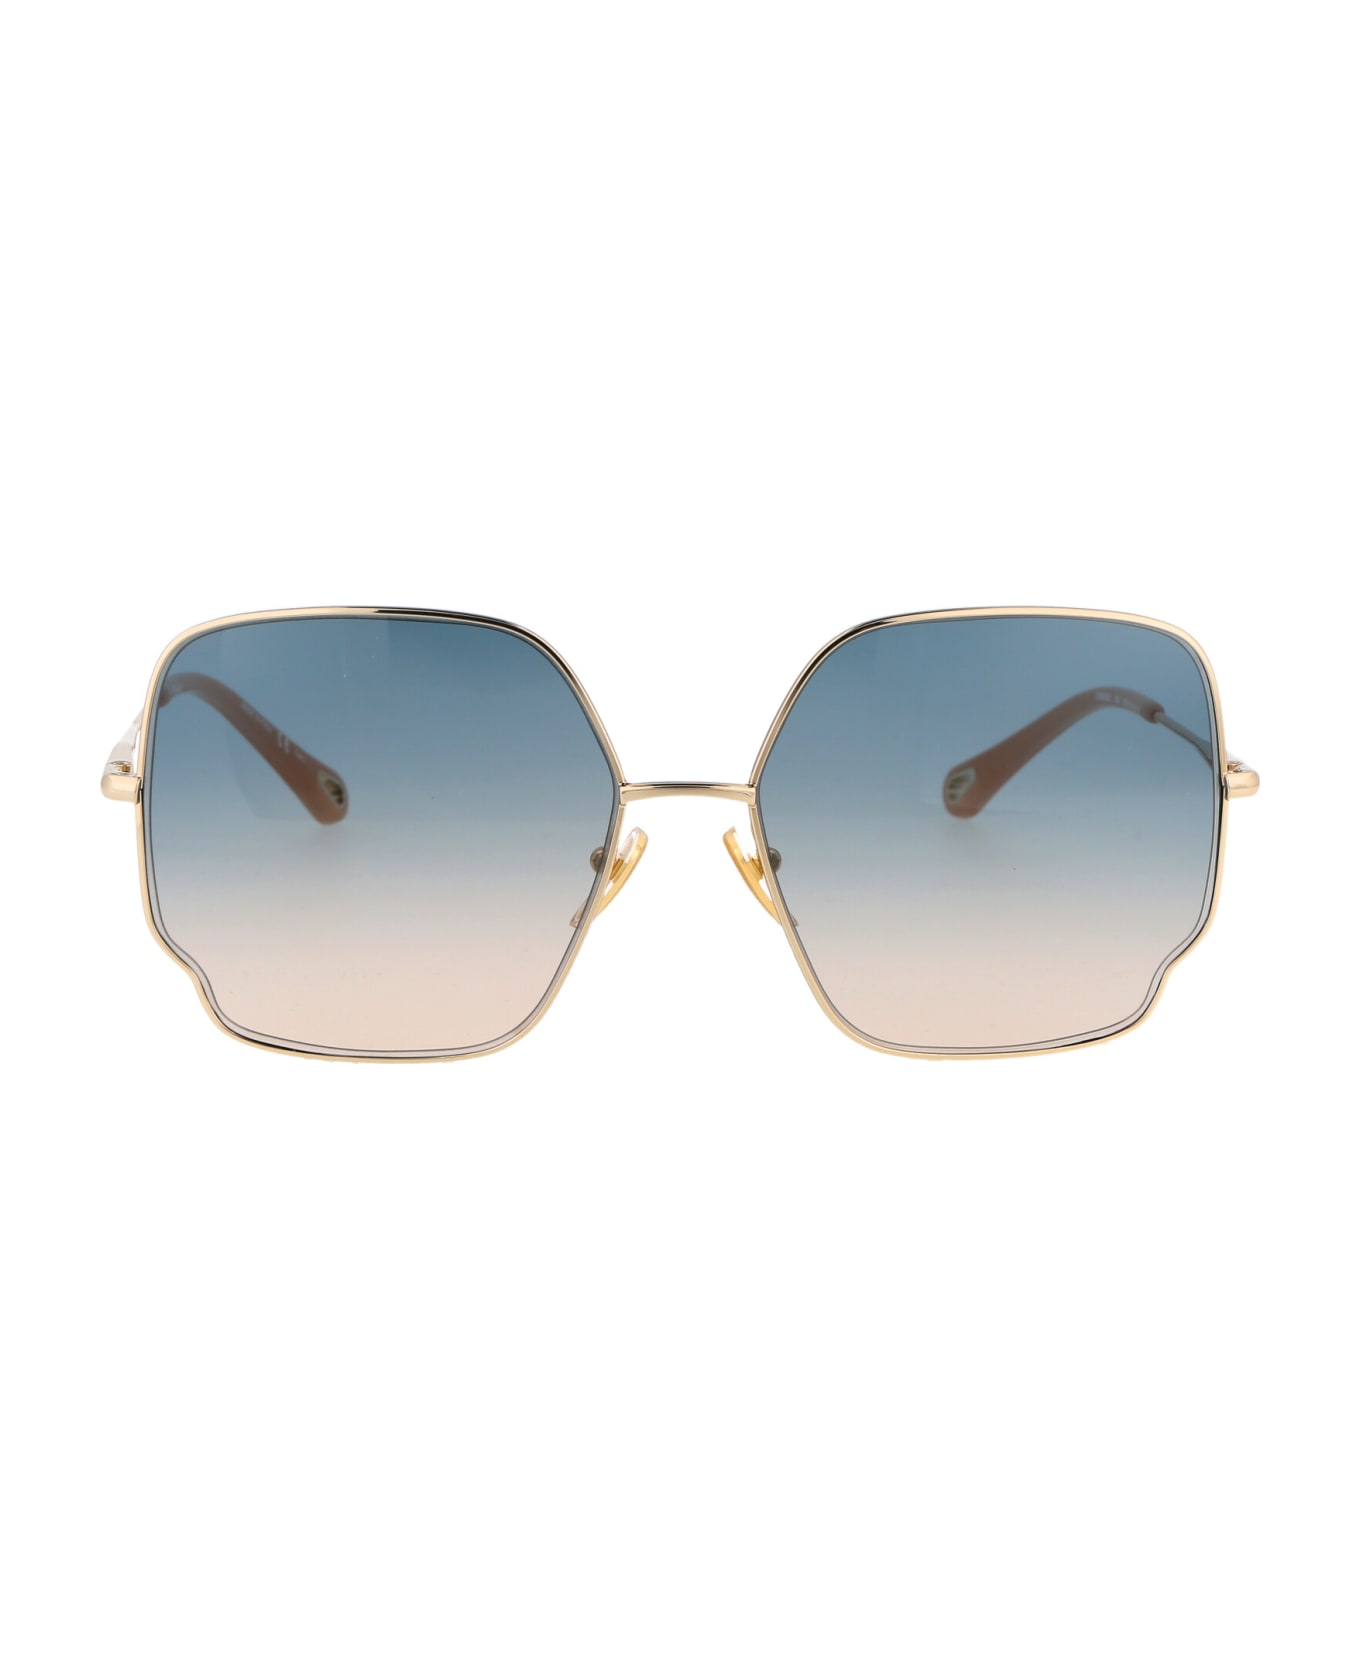 Chloé Eyewear Ch0092s Sunglasses - 003 GOLD GOLD GREEN サングラス